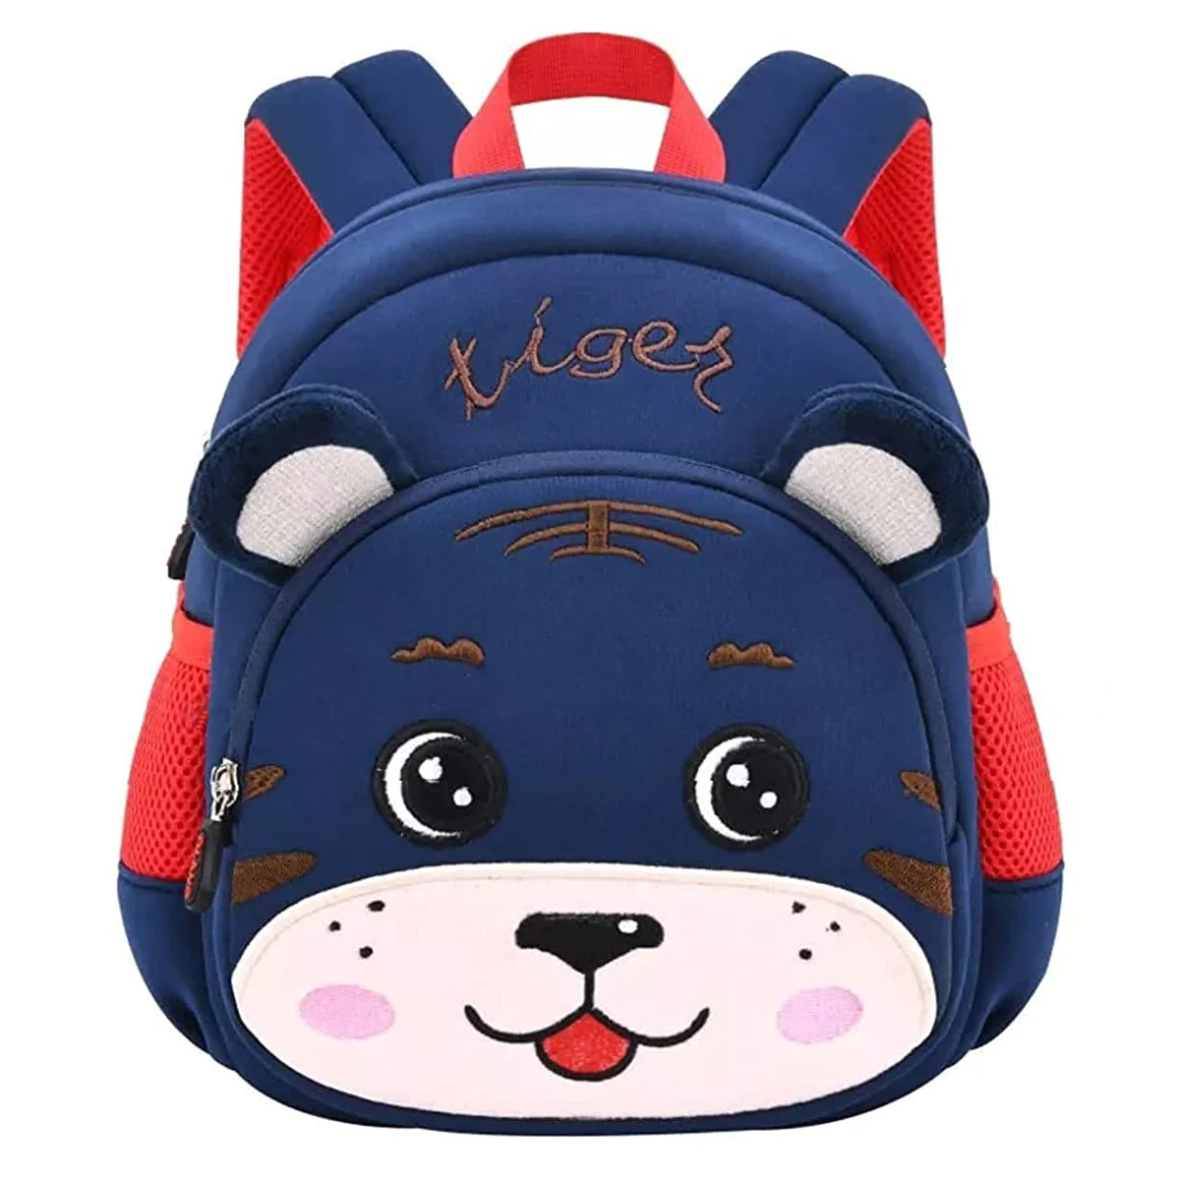 u-smile-cute-tiger-design-bag-for-pre-schoolers-kids-water-resistant-mini-backpack-for-kids-lightweight-small-size-bag-for-play-school-nursery-kids-picnic-bag-travel